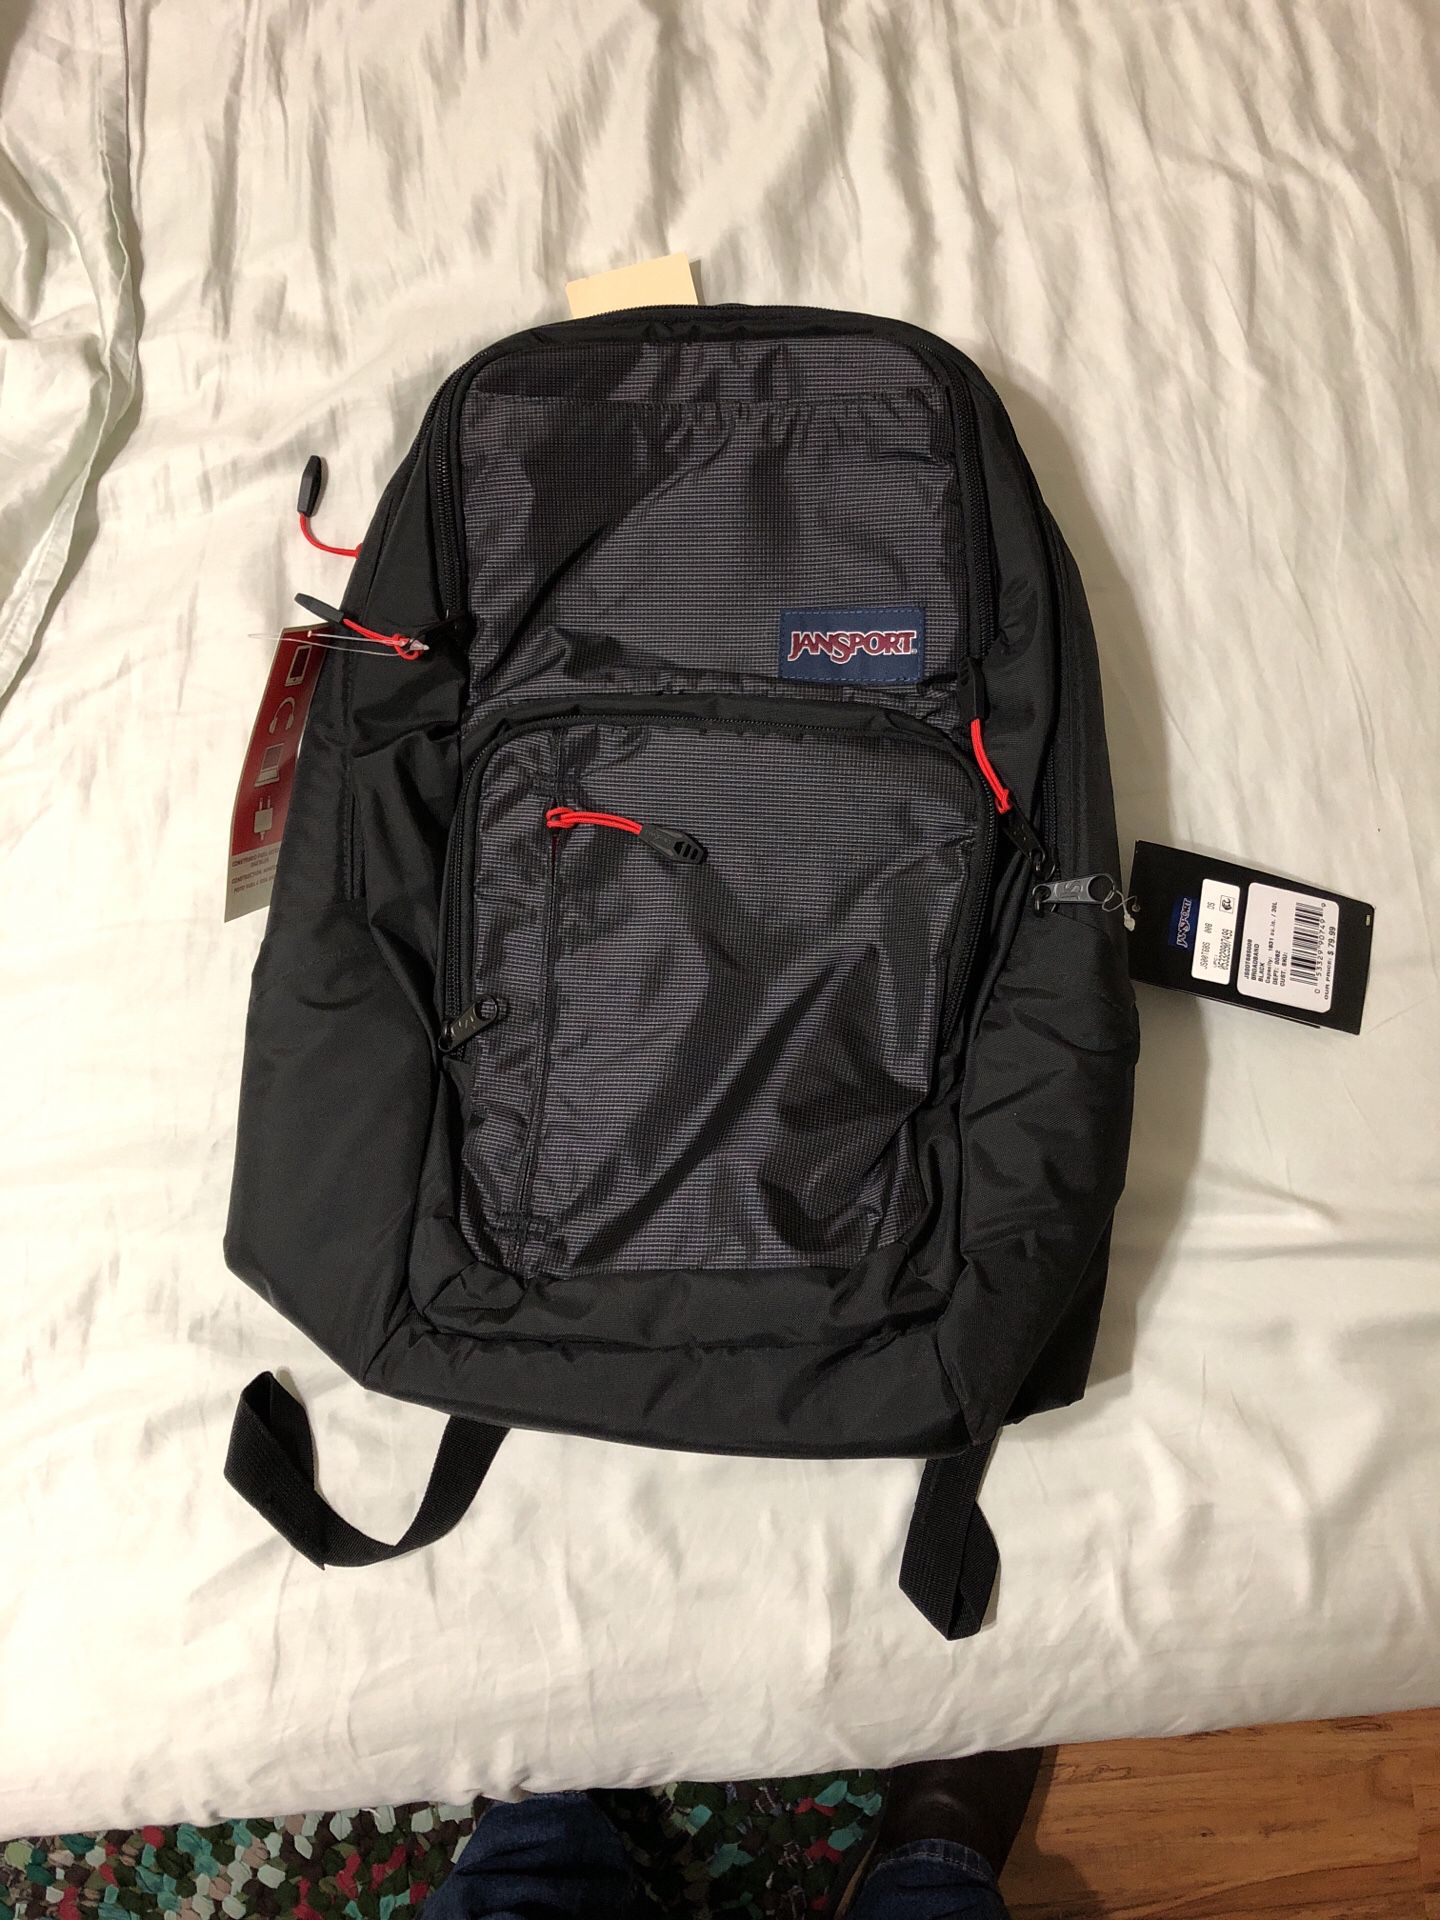 Jansport NEW. Backpack. Named the broadband in black.